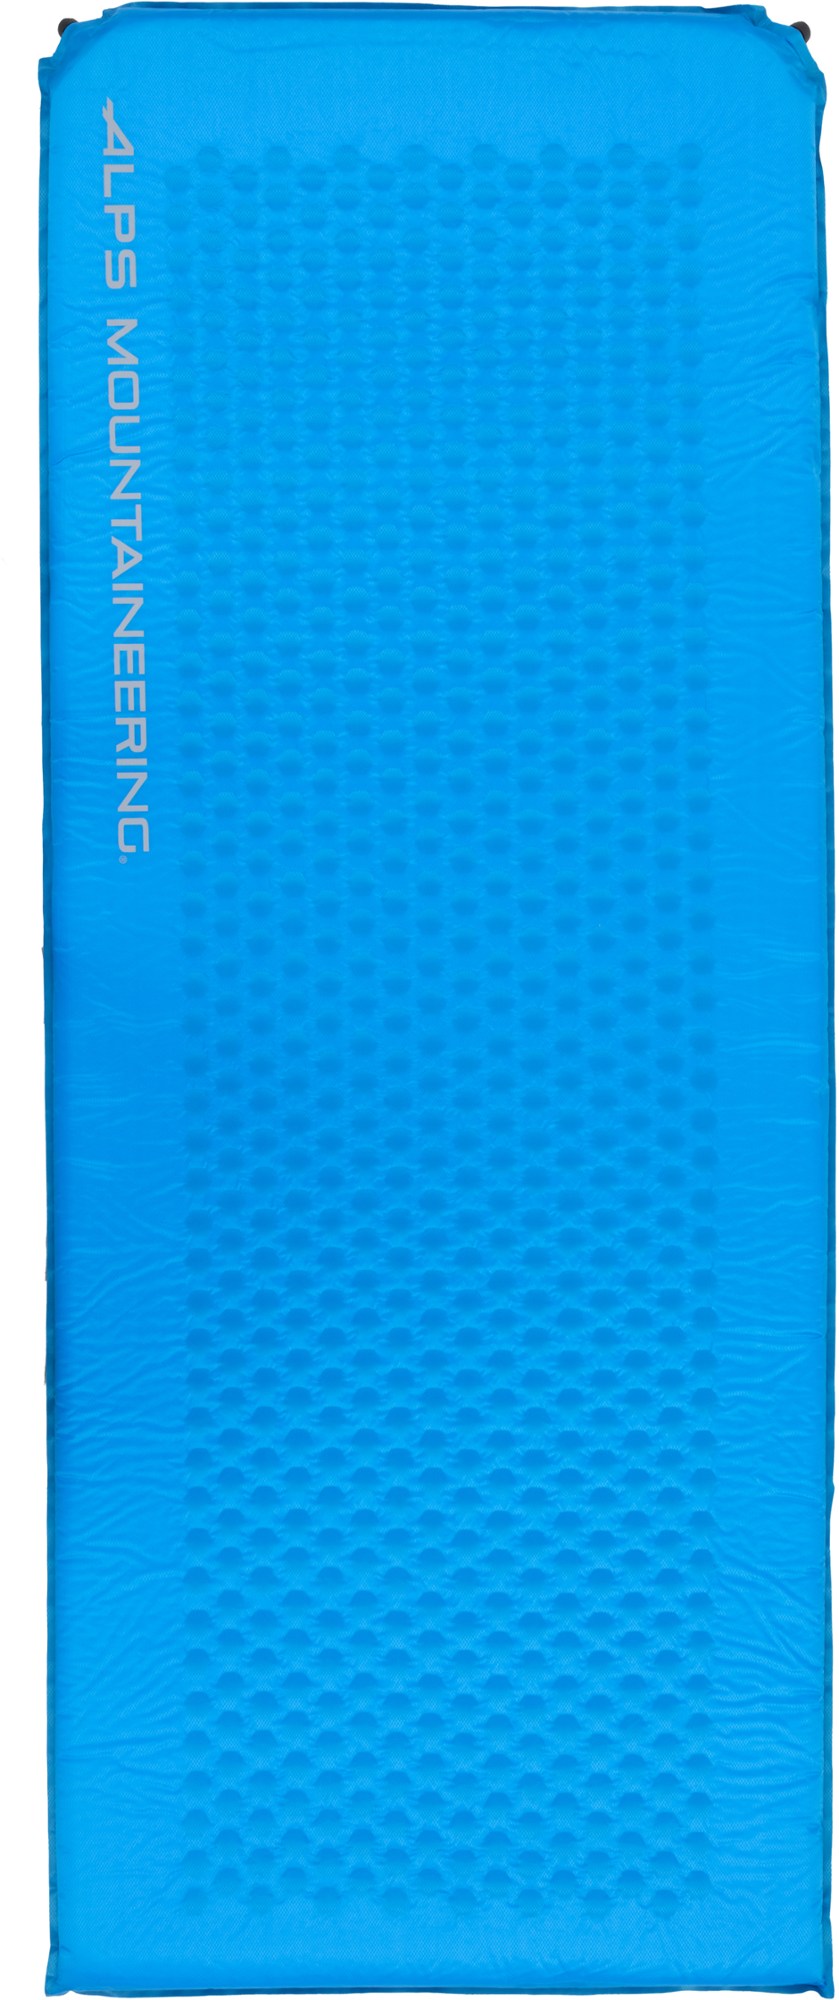 подушка туристическая самонадувающаяся 39 28 5 см Flexcore Air Pad — XL ALPS Mountaineering, синий